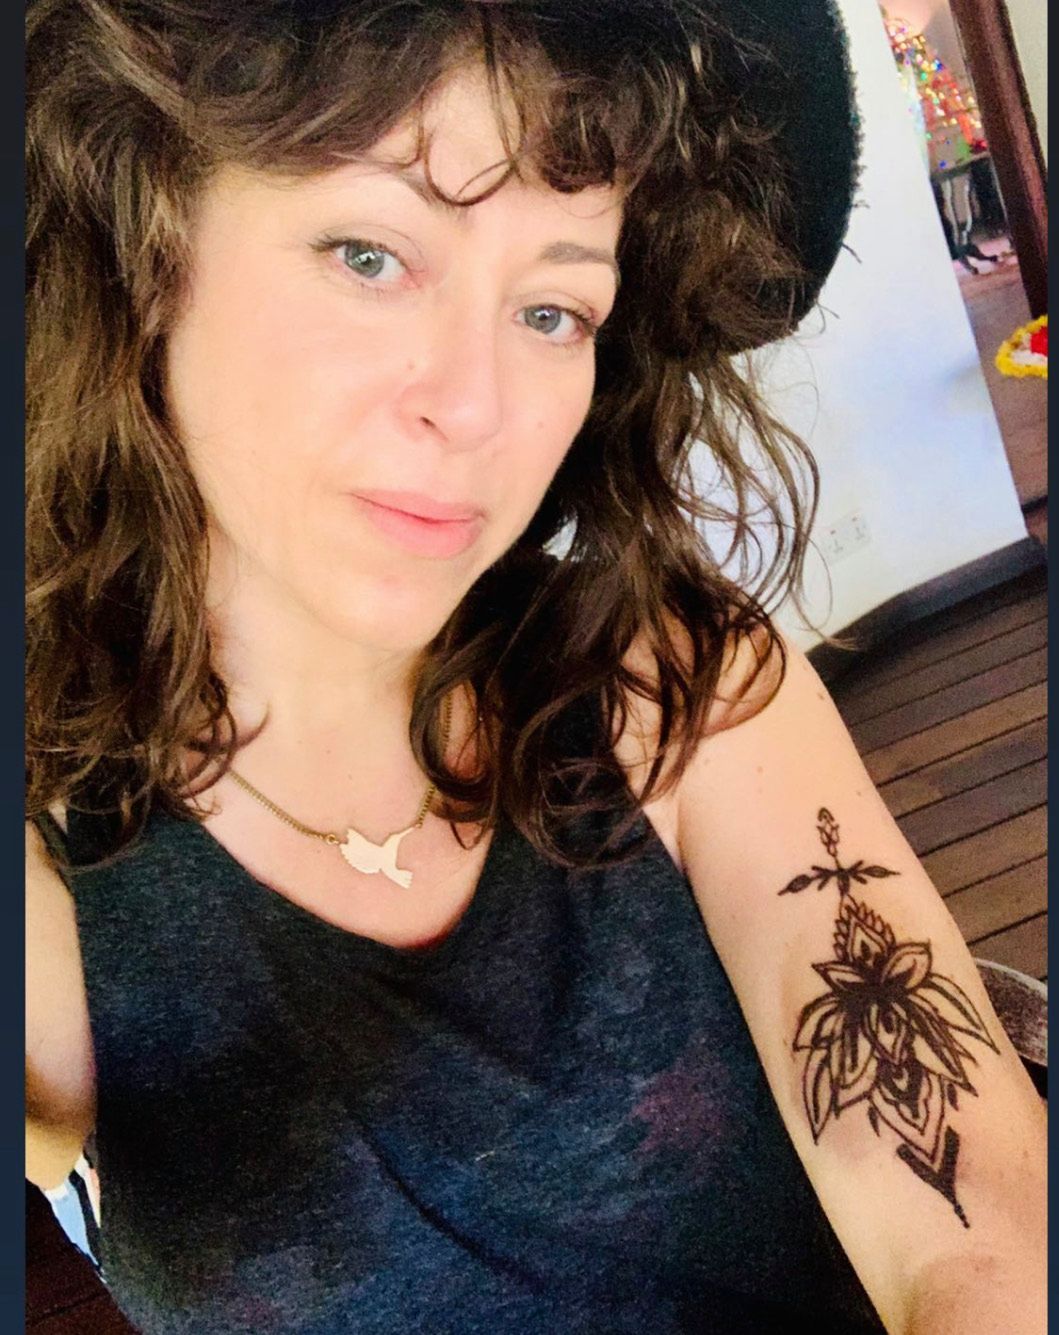 Natalia Kukulska zrobiła sobie tatuaż